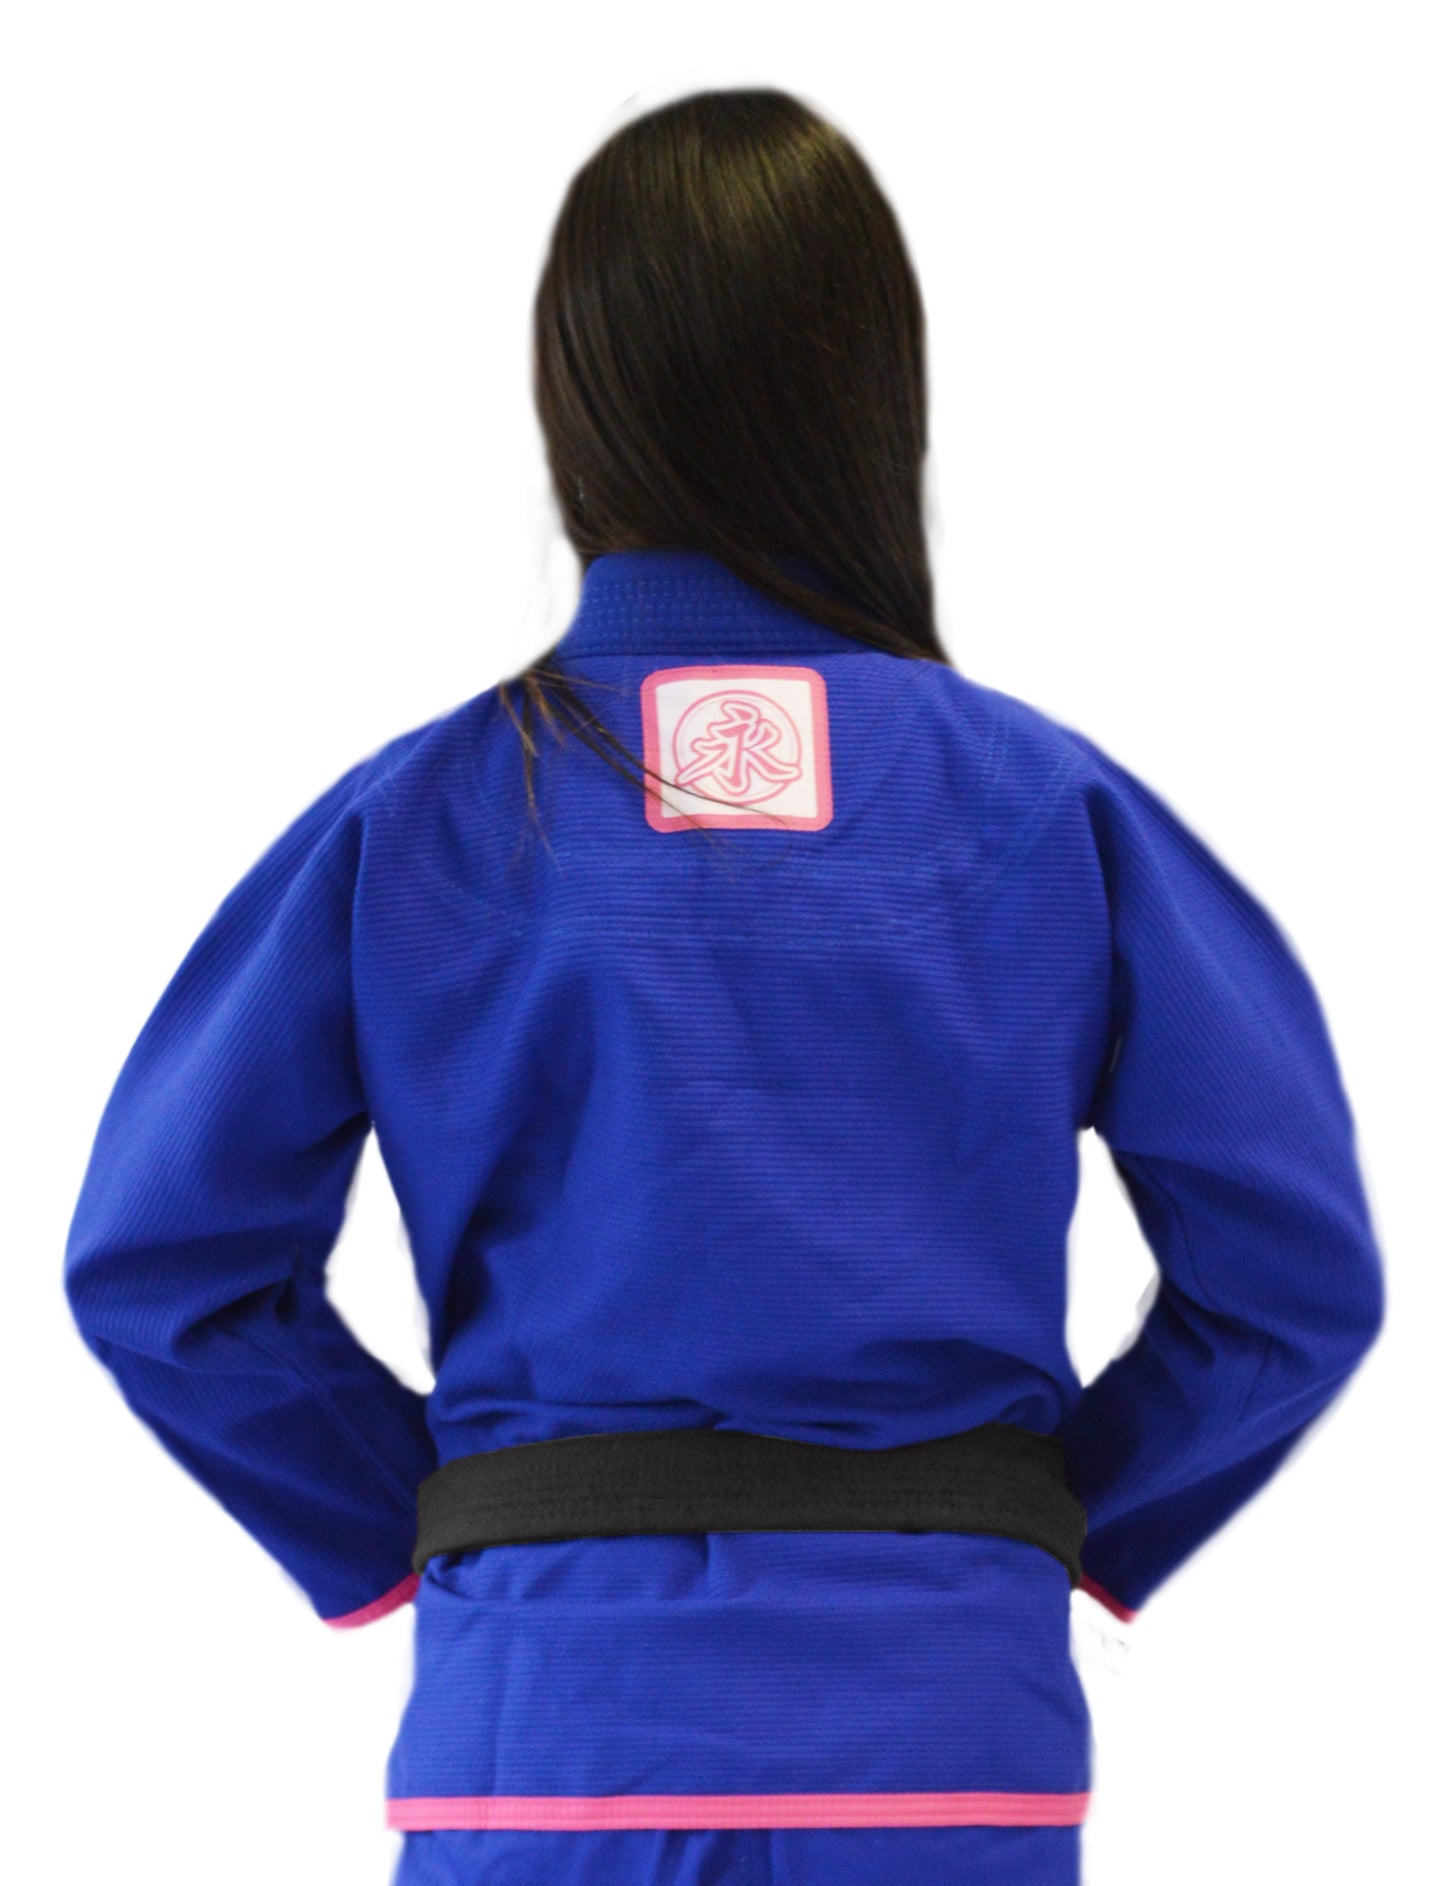 Juvenile Kimono (Gi TOP) - Blue/Pink